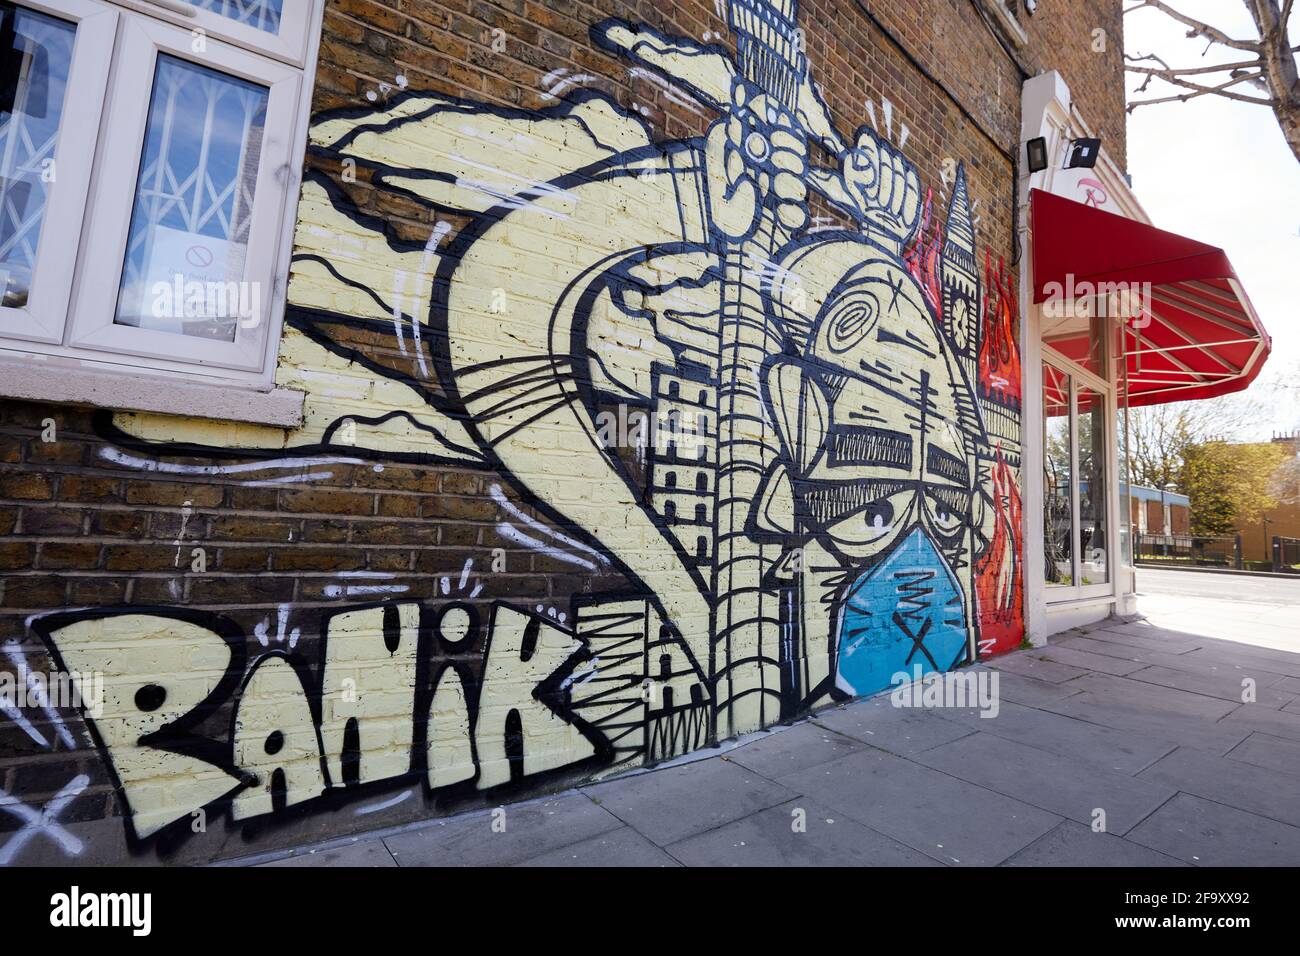 London, UK - 18 Apr 2021: A street mural, drawn during the coronavirus pandemic by graffiti artist Panik, on the side wall of an ice-cram shop . Stock Photo